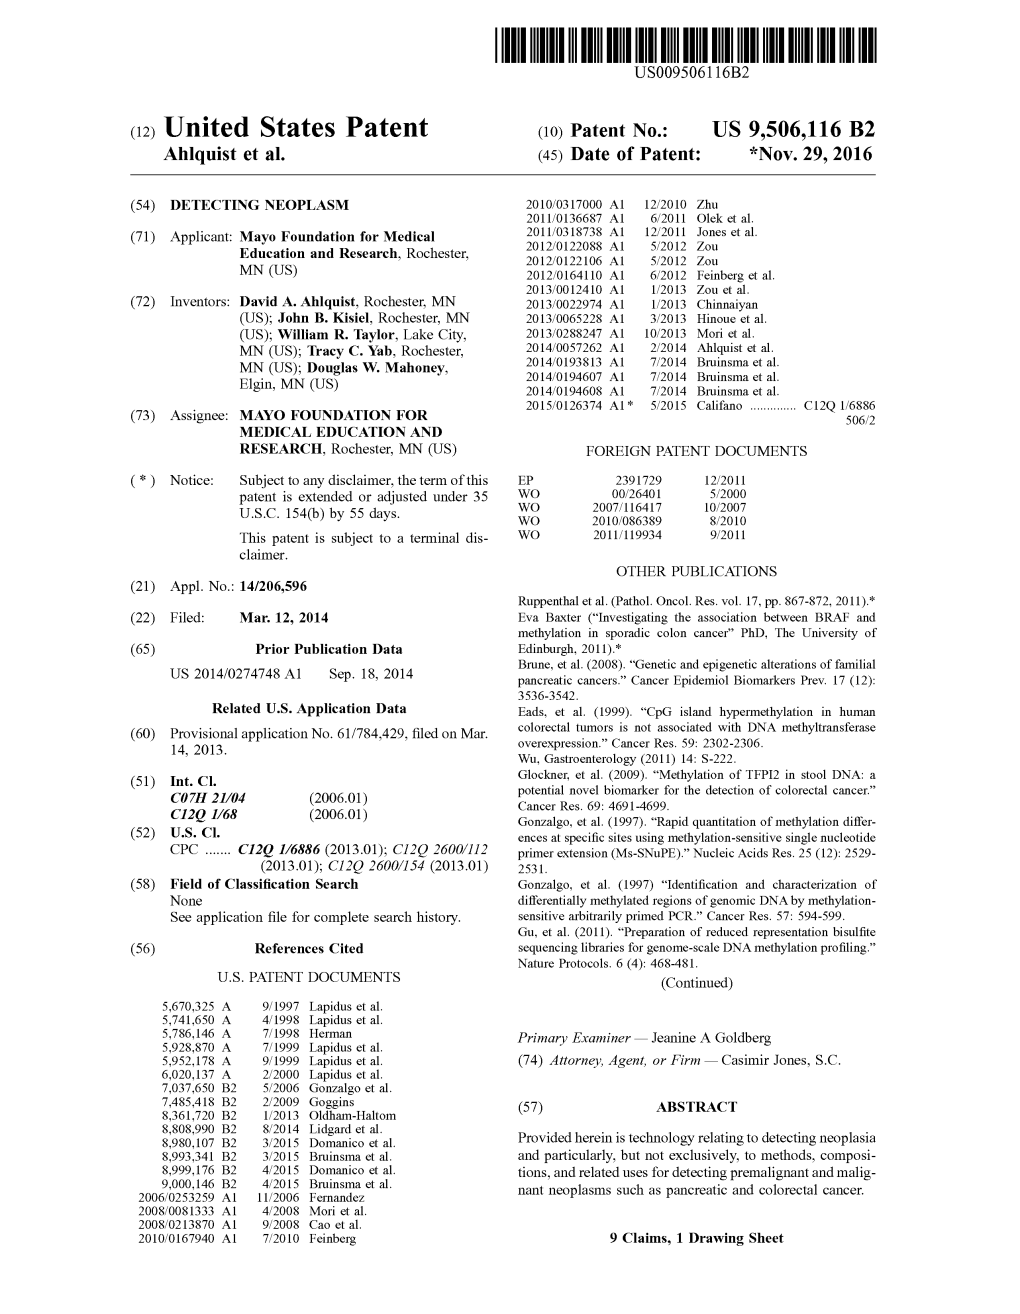 (12) United States Patent (10) Patent No.: US 9,506,116 B2 Ahlquist Et Al